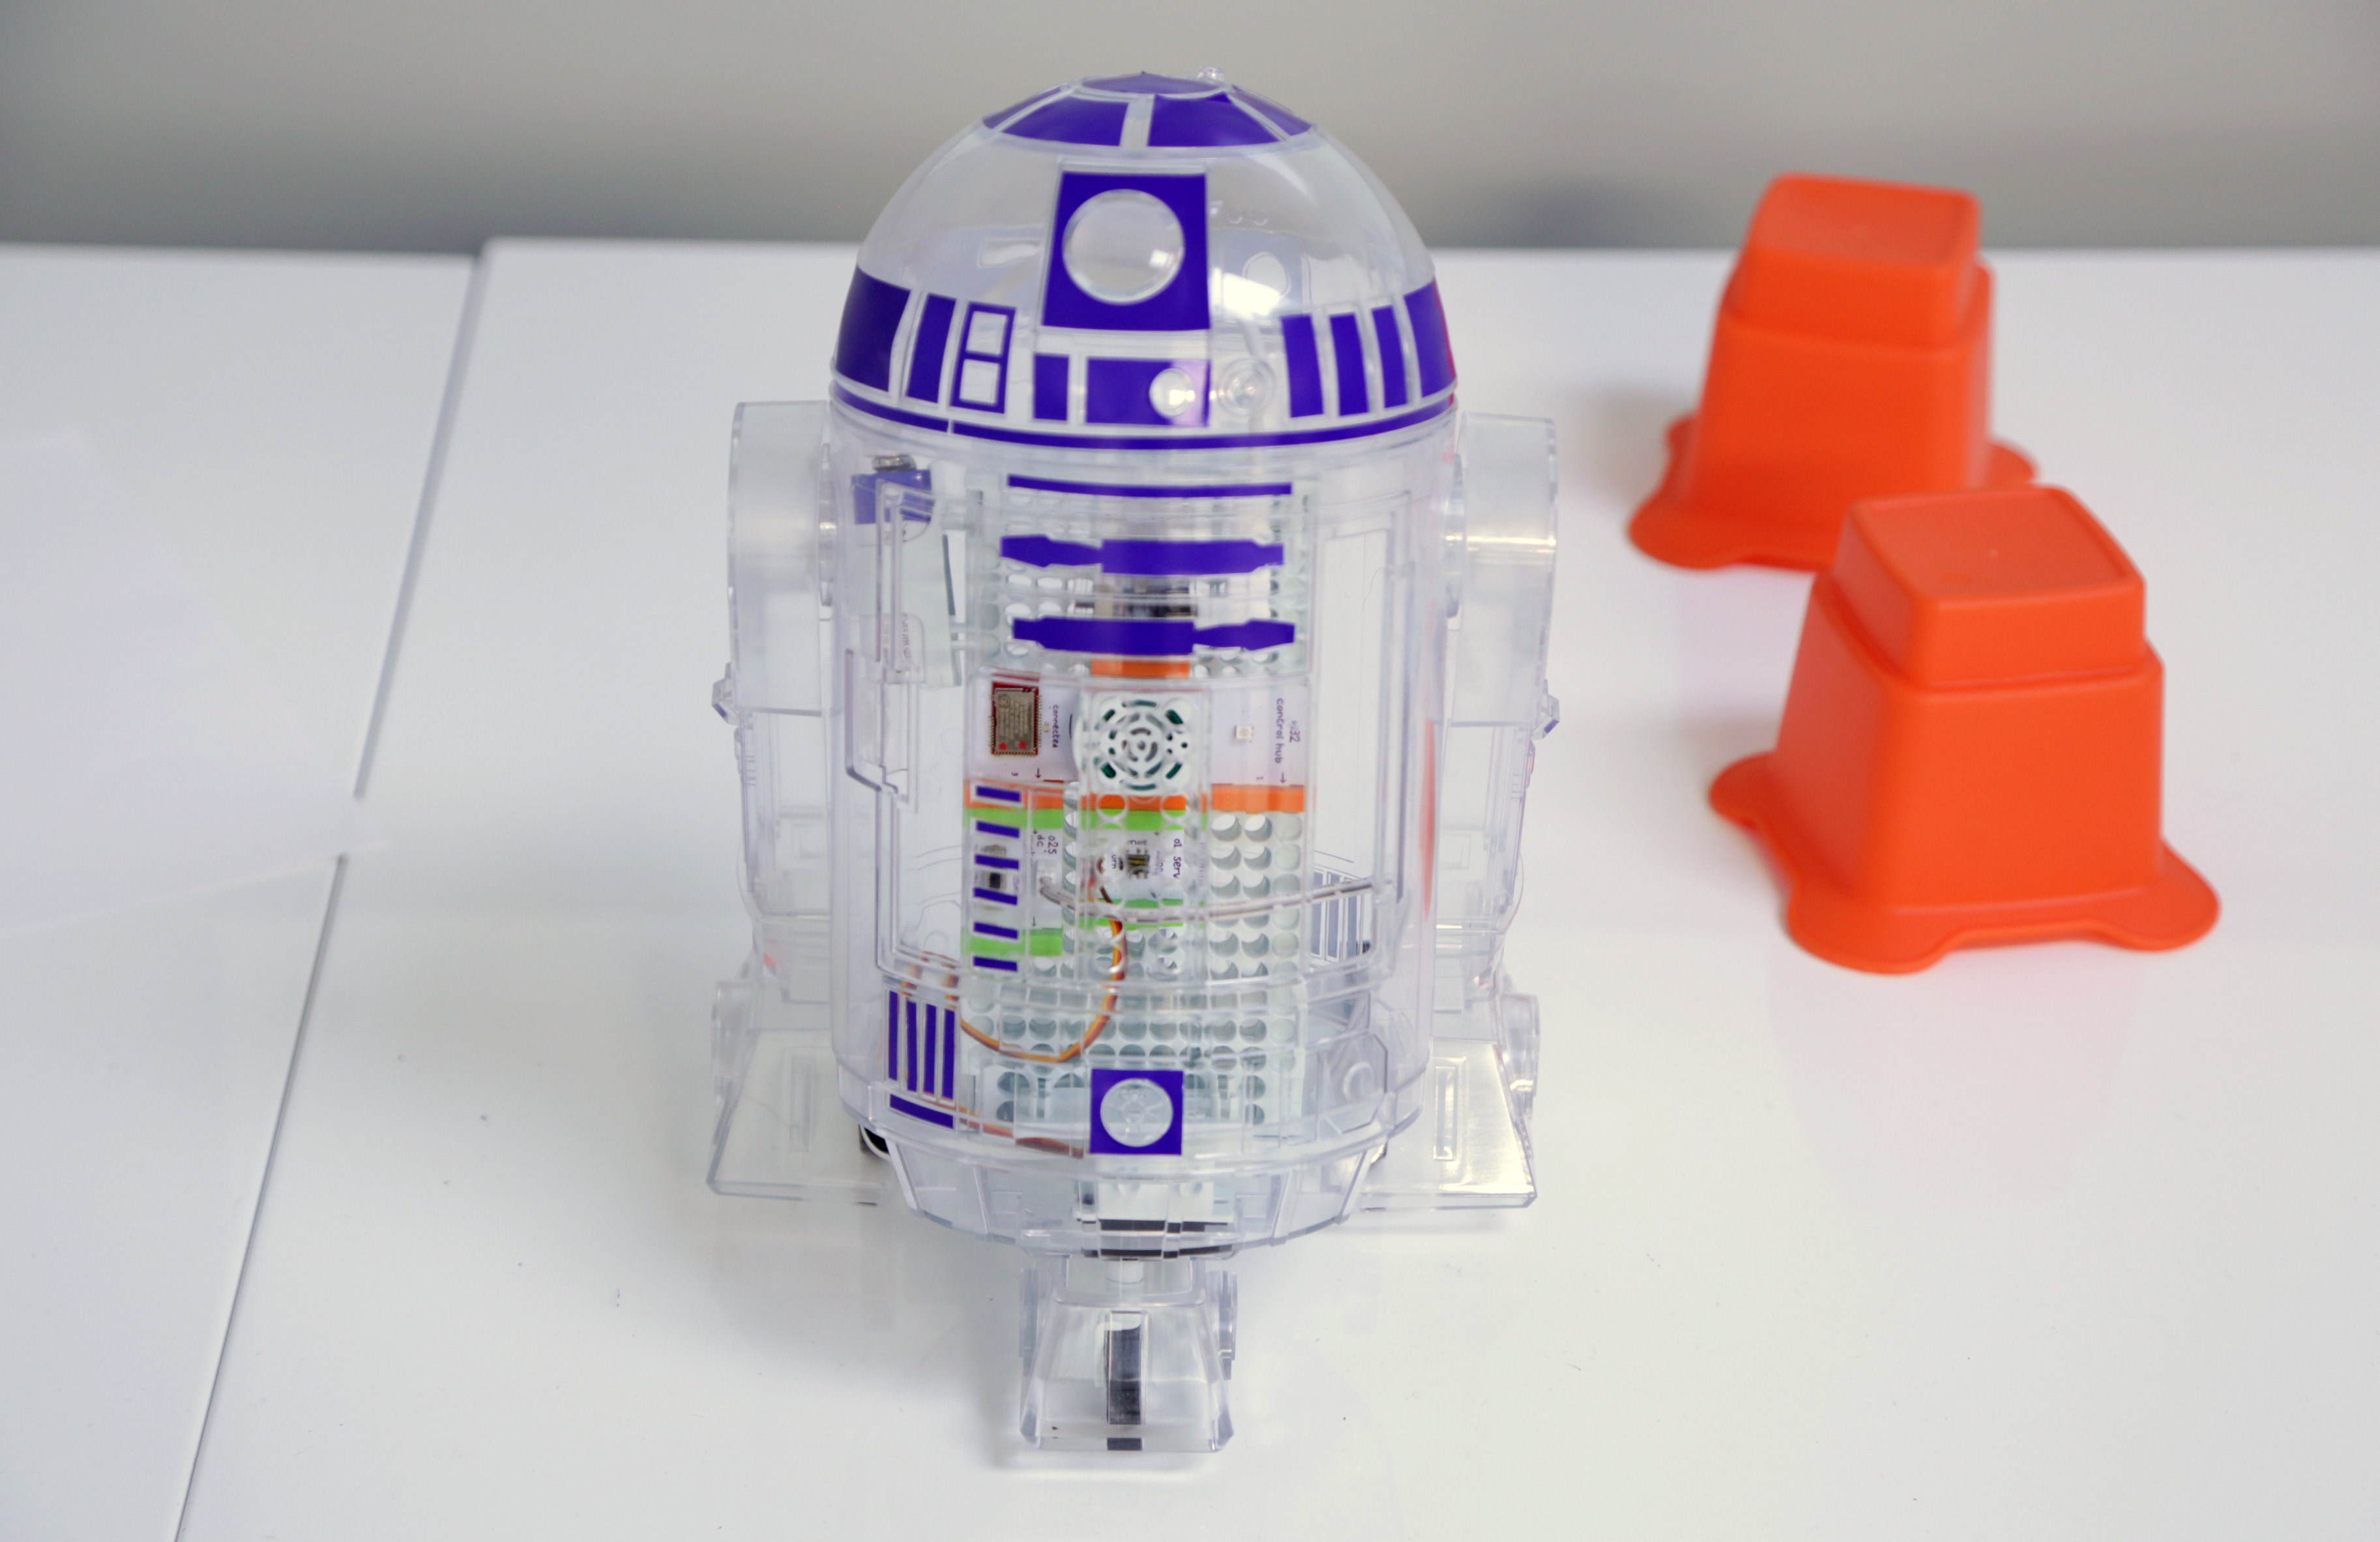 droid inventor kit walmart